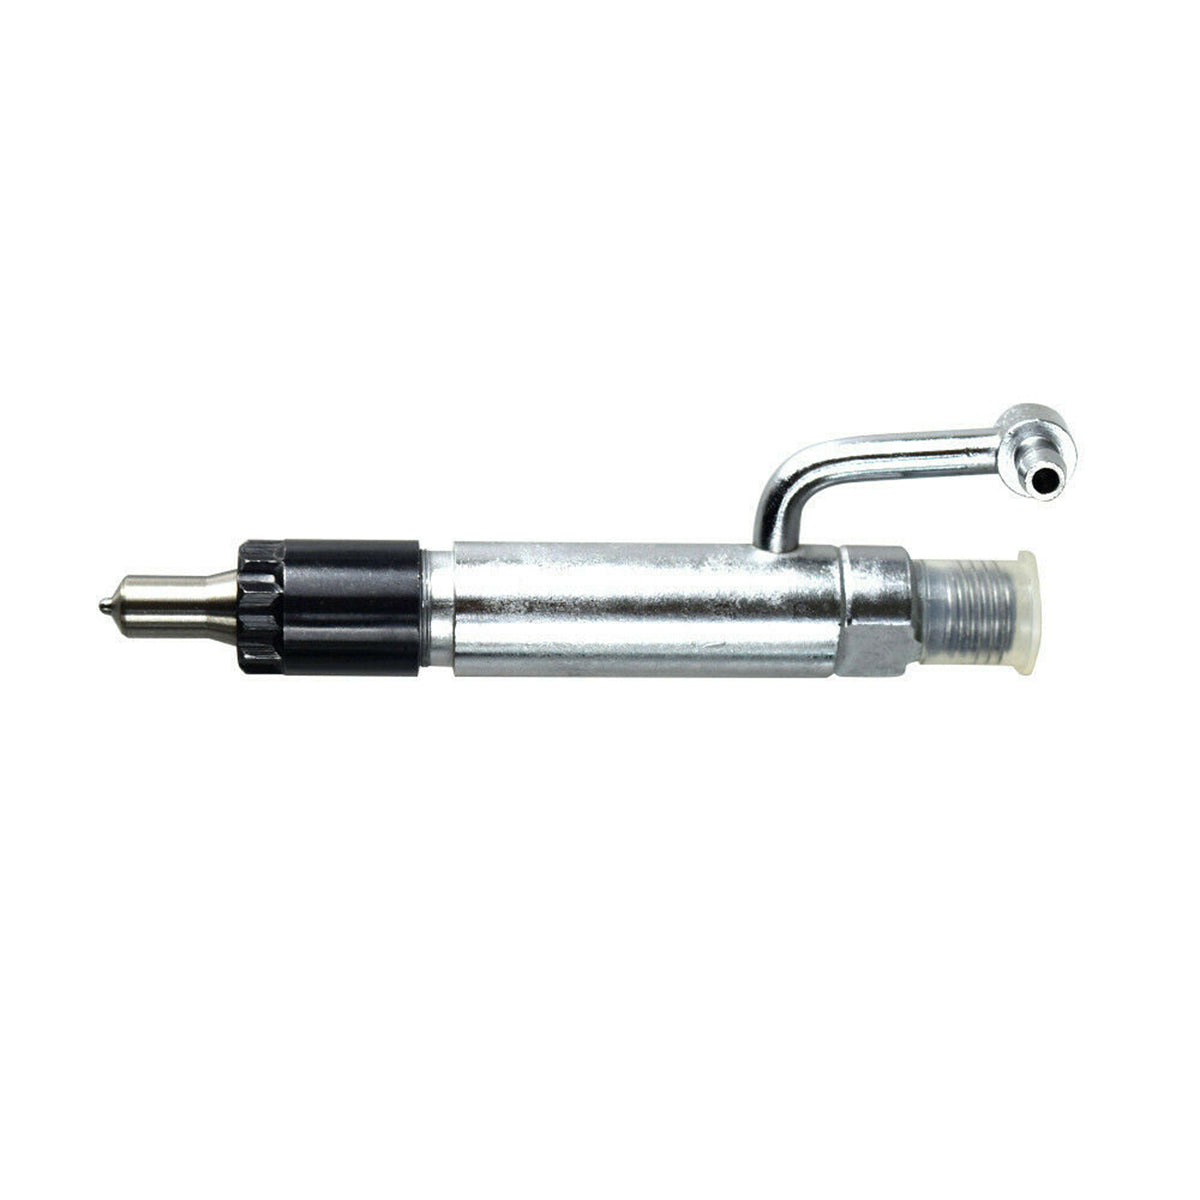 Fuel Injector 729503-53100, Fuel Injector For Yanmar Komatsu, Daysyore Fuel Injector, Car Fuel Injector, Auto Fuel Injector